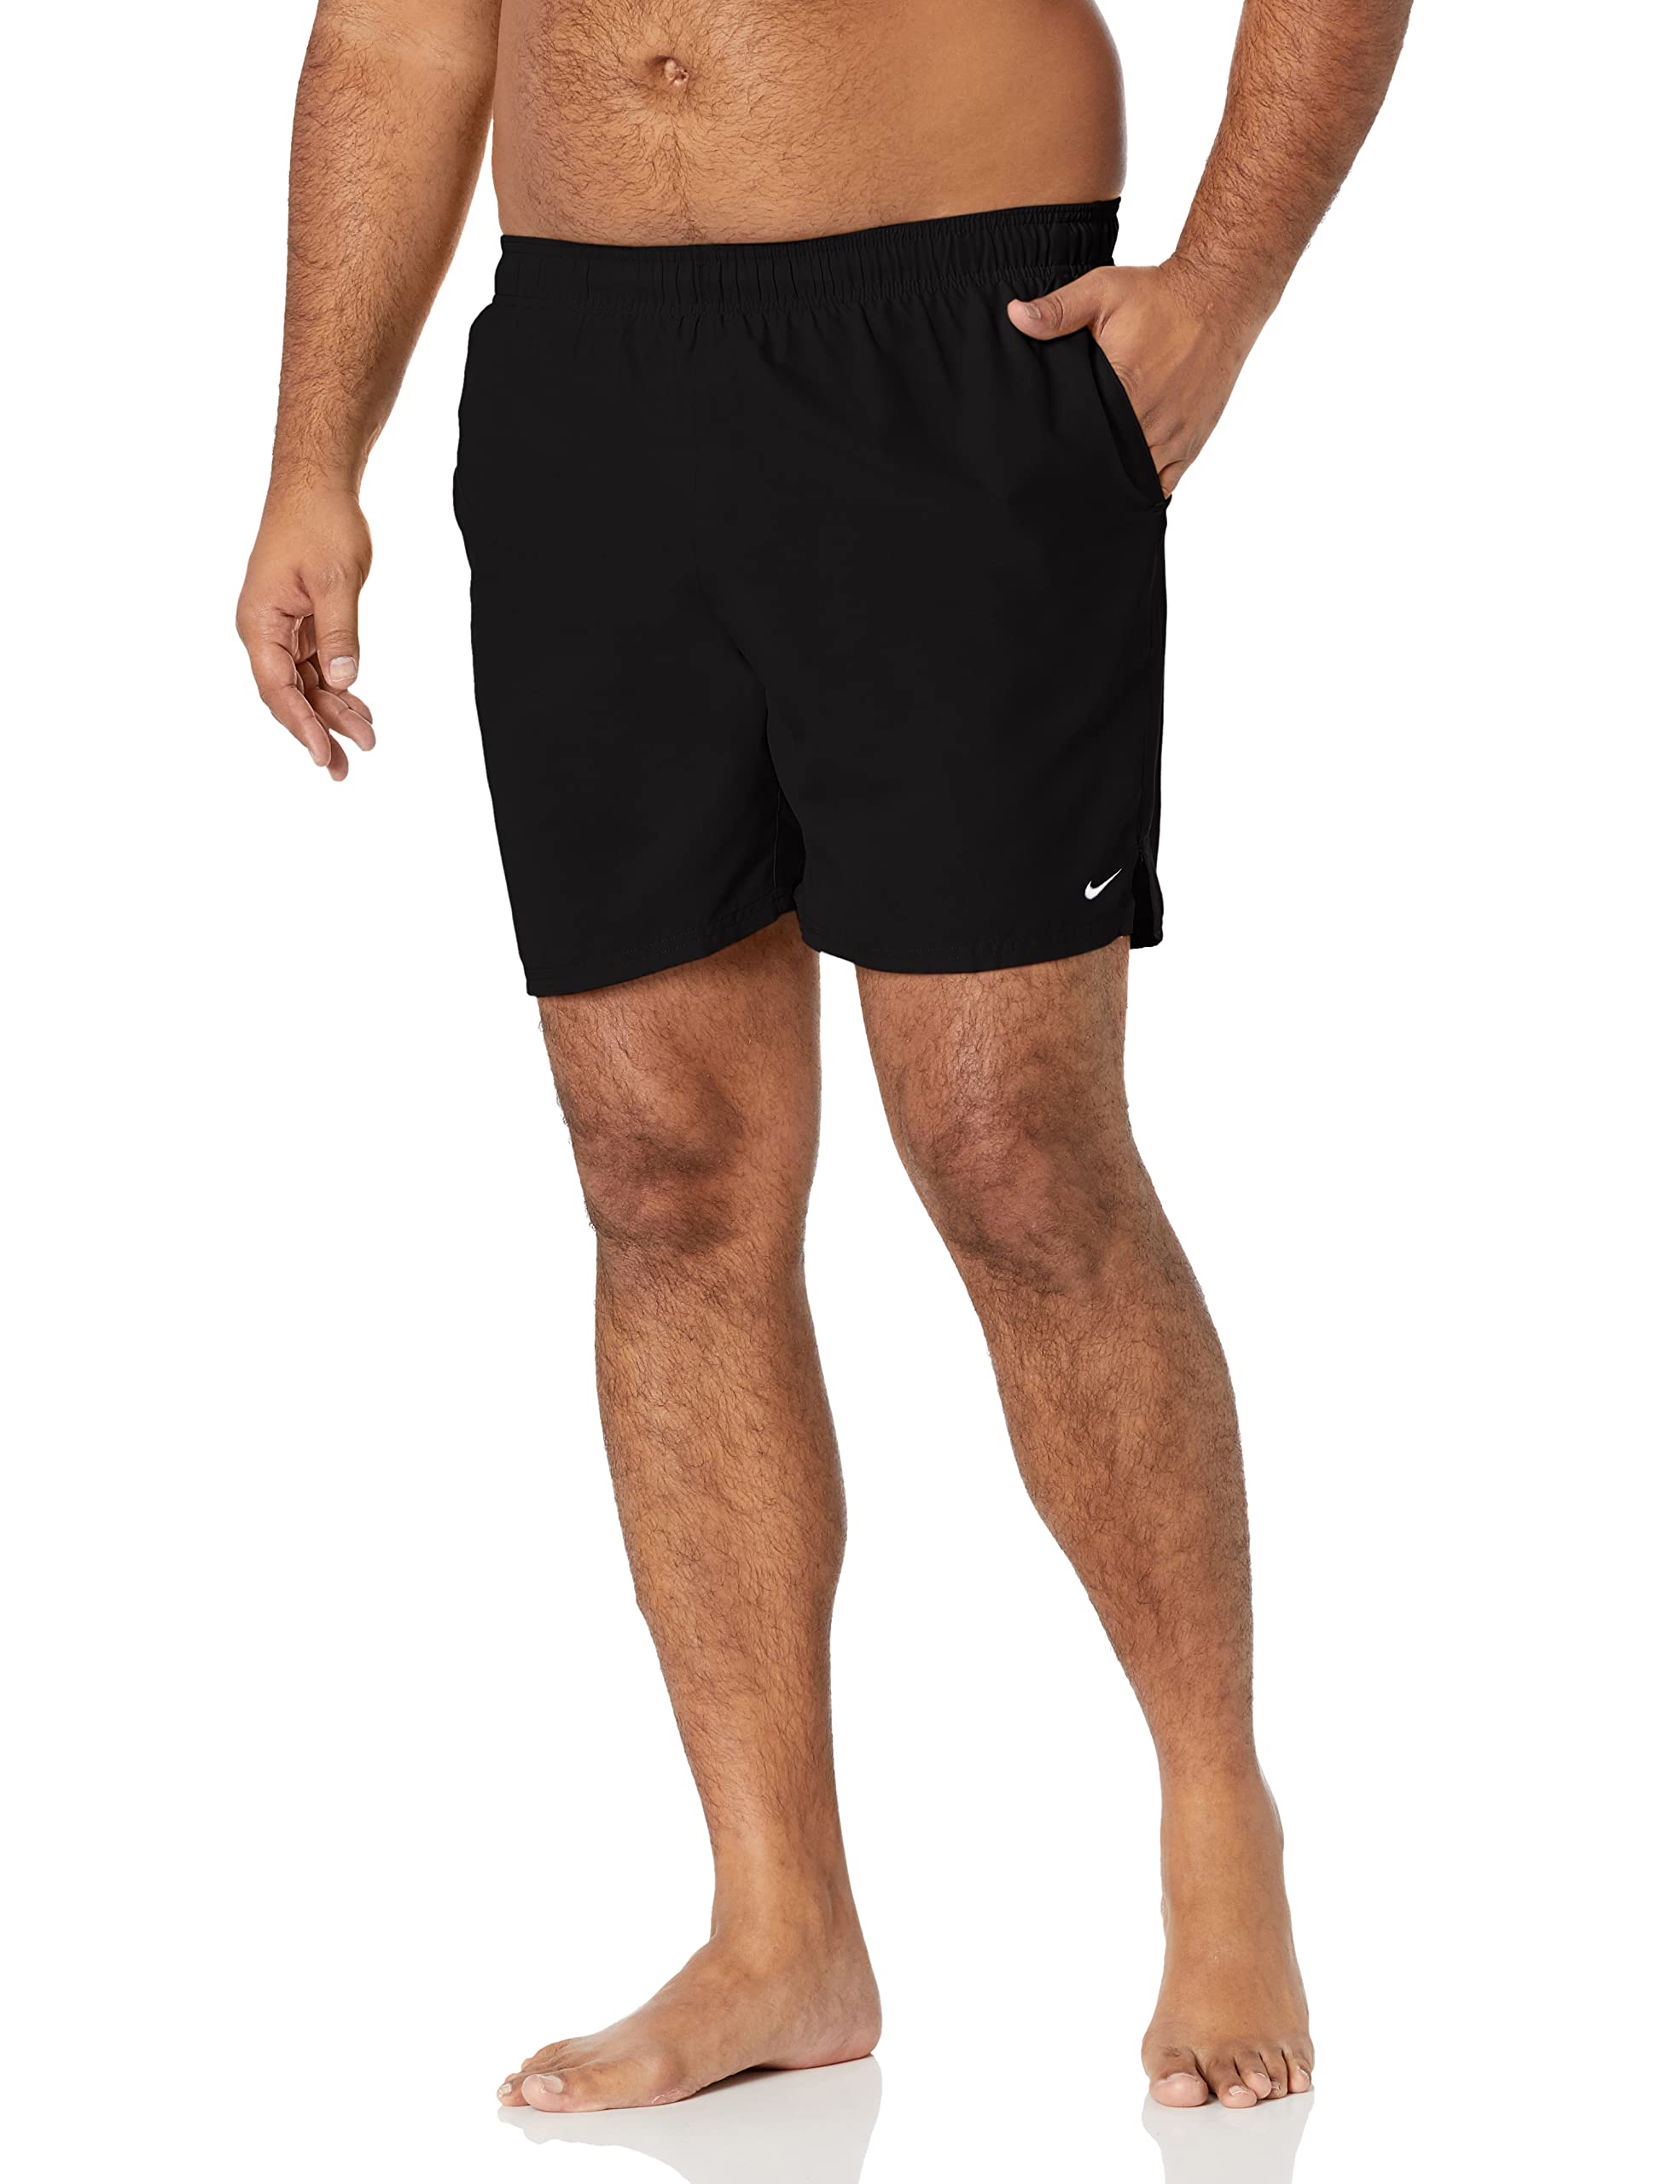 Nike Mens Solid Lap 7 Inch Volley Short Swim Trunk - Black White - XL